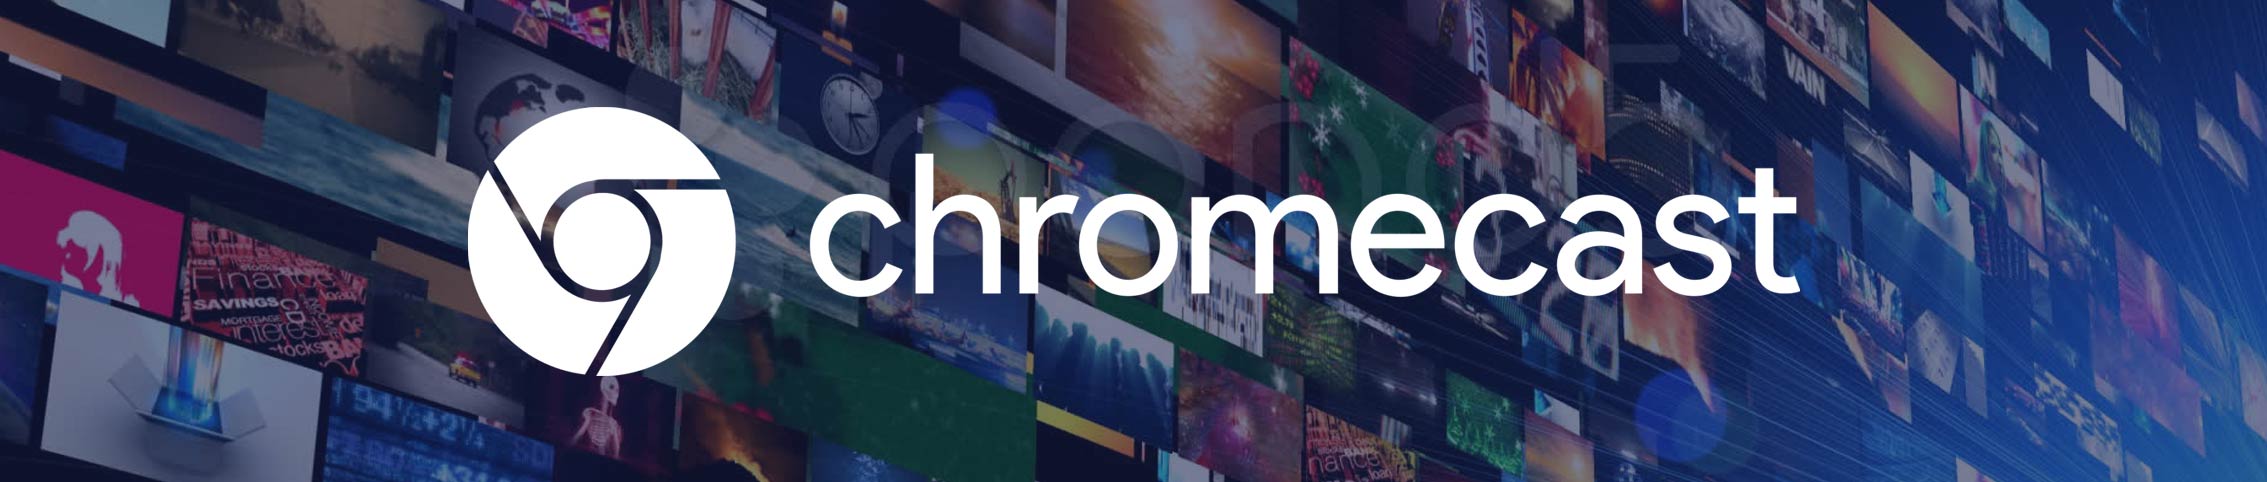 Chromecast Streaming, cuál es el mejor streaming tv